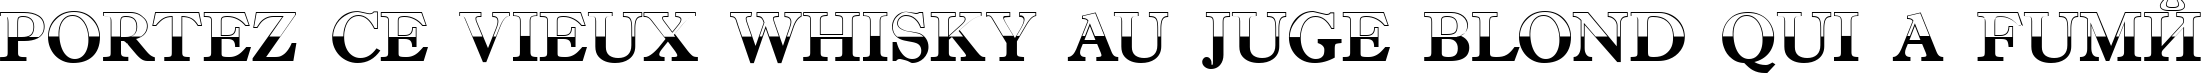 Пример написания шрифтом a_AntiqueTradyTtlB&W текста на французском